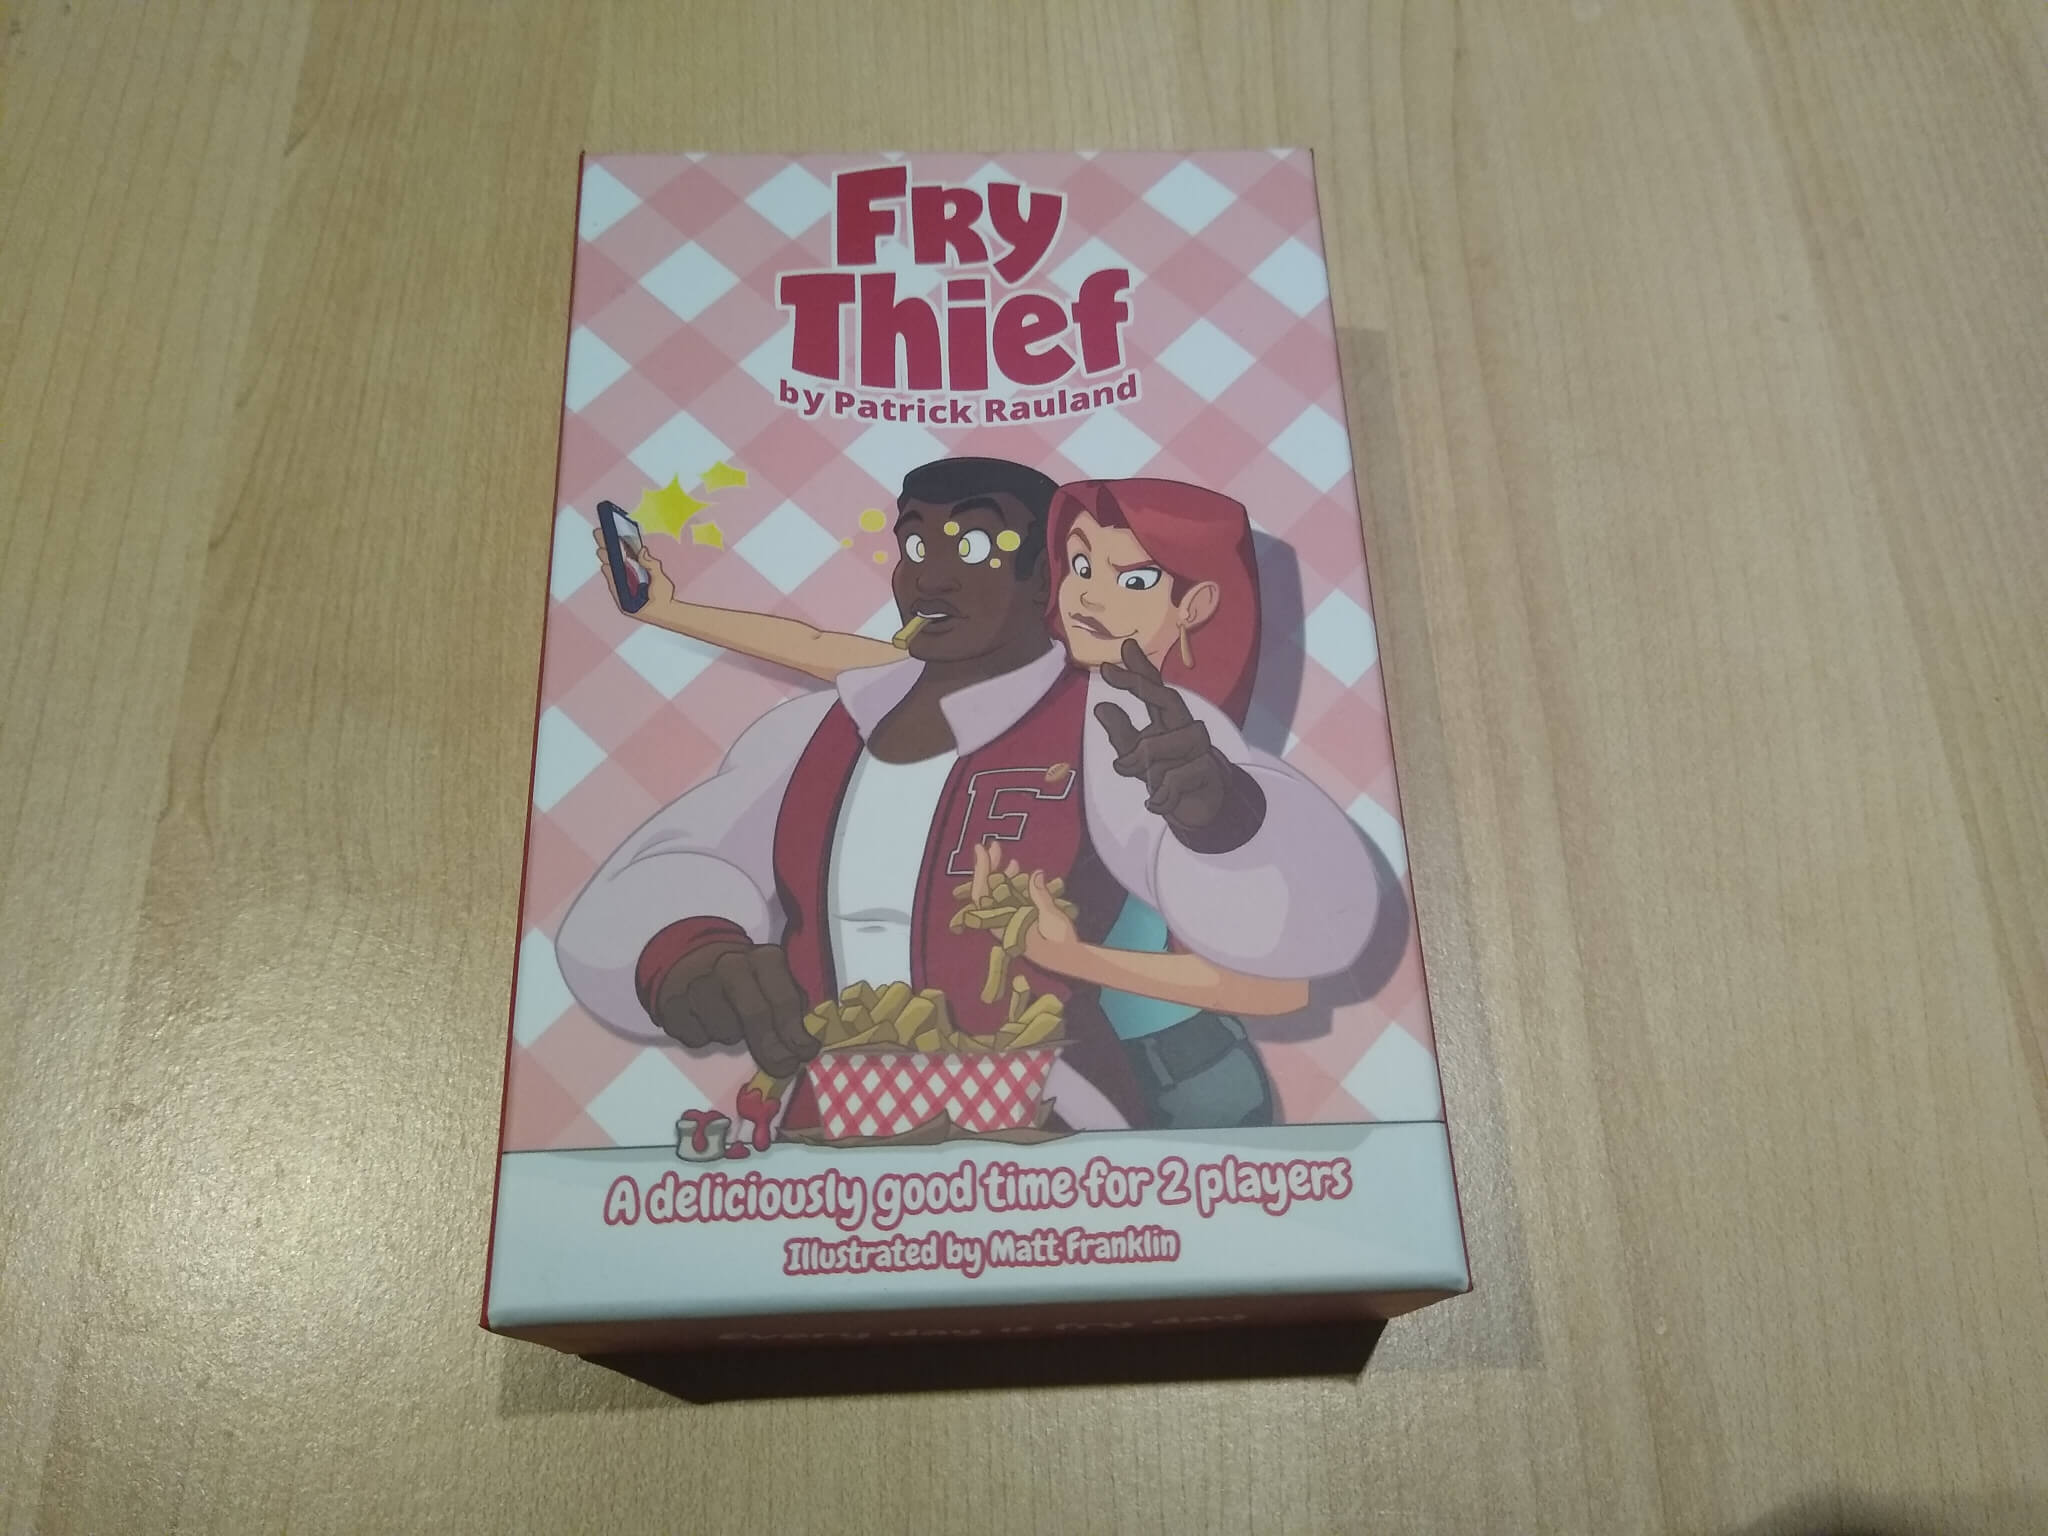 Fry Thief